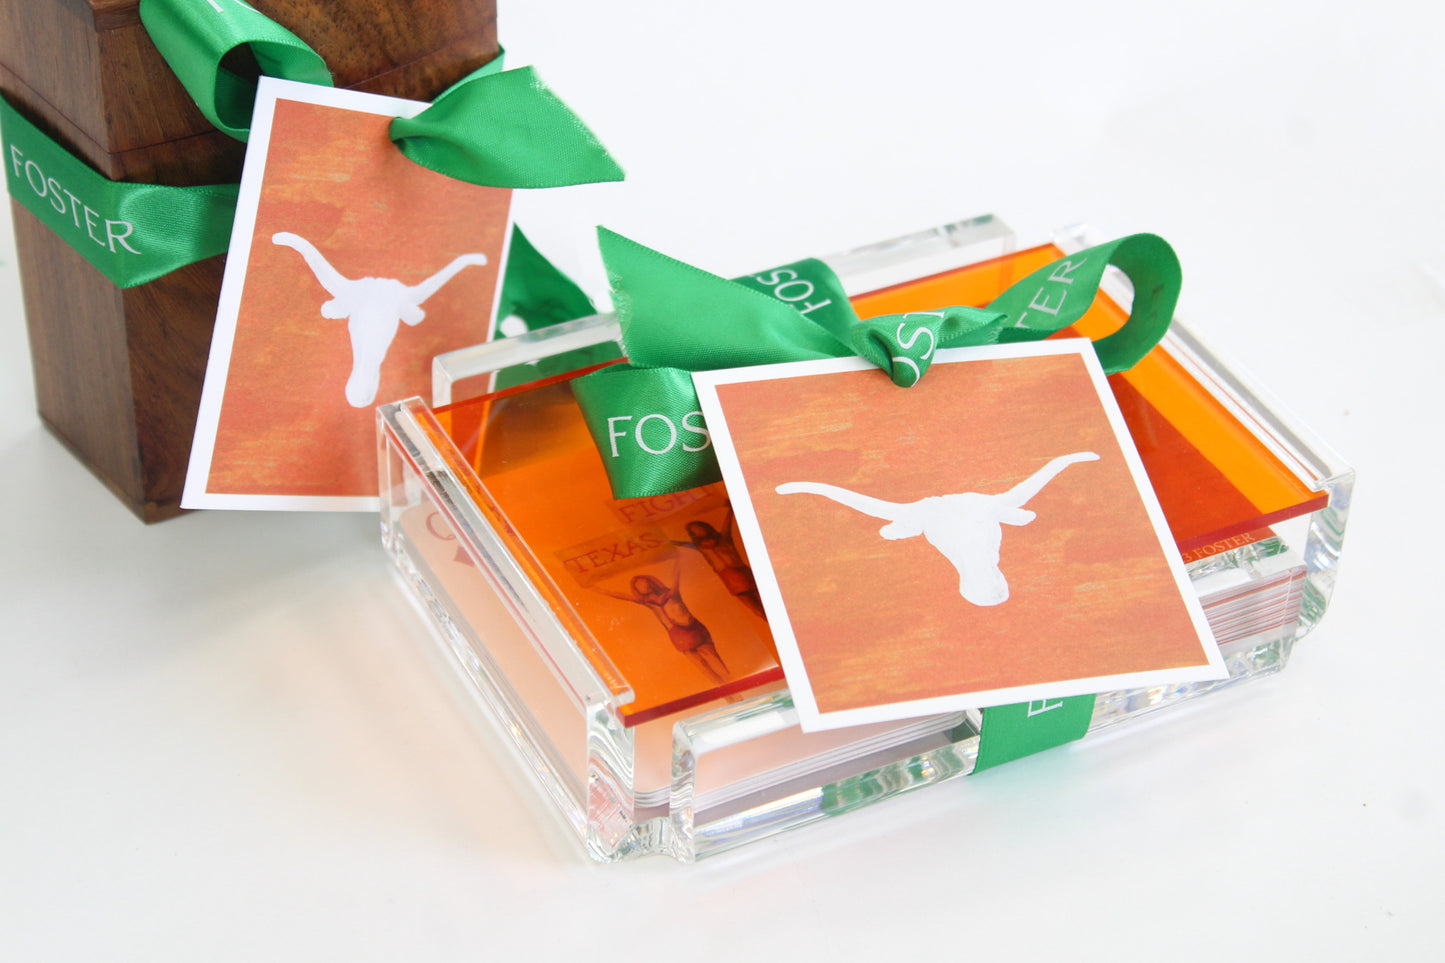 University of Texas UT Longhorns gift tag set